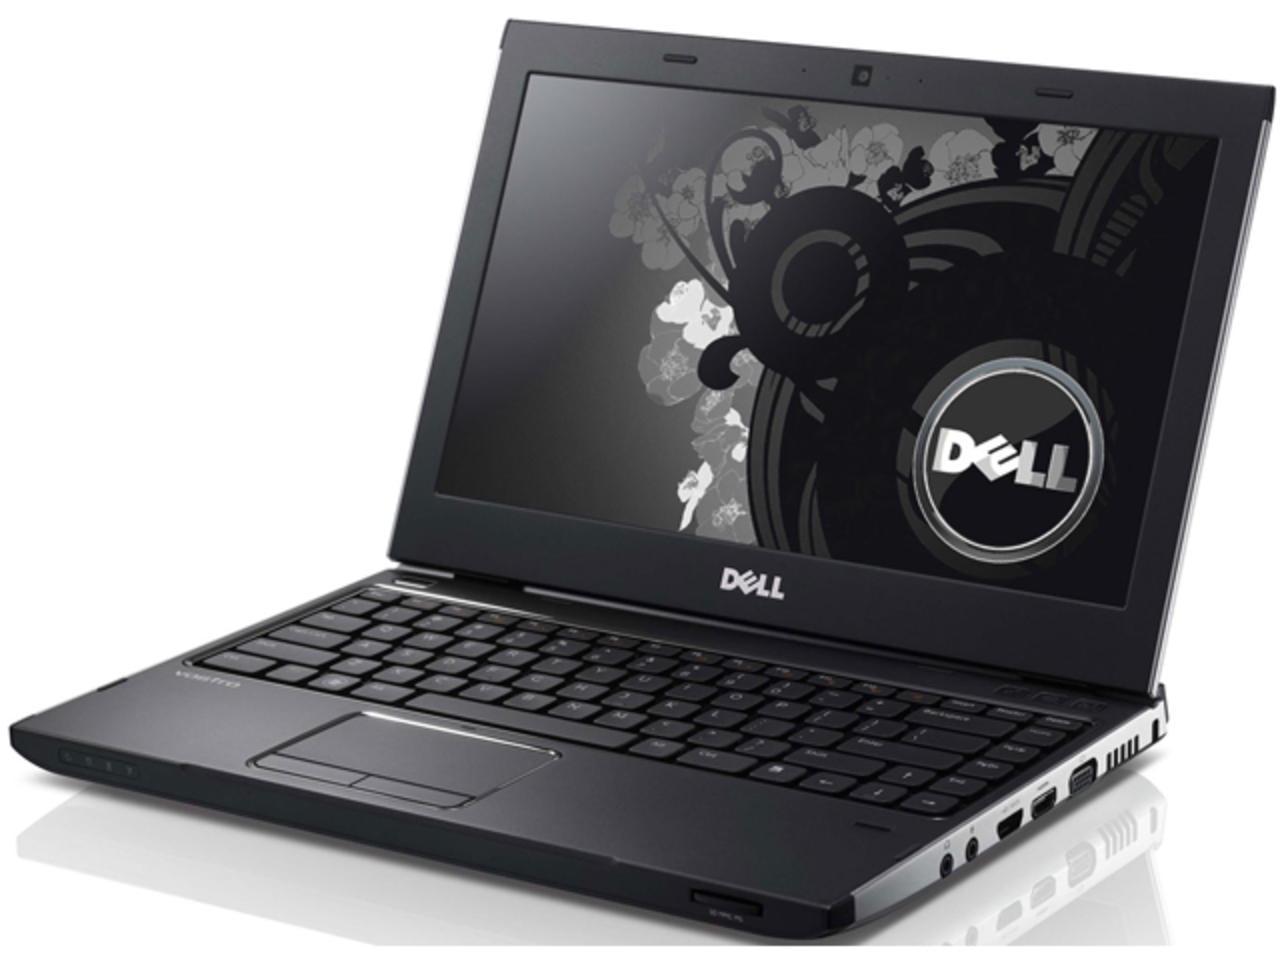 Dell Vostro 3350 Intel I5 2410m 2 30ghz 4gb Ram 3gb Hdd Win 10 Pro Webcam Walmart Com Walmart Com